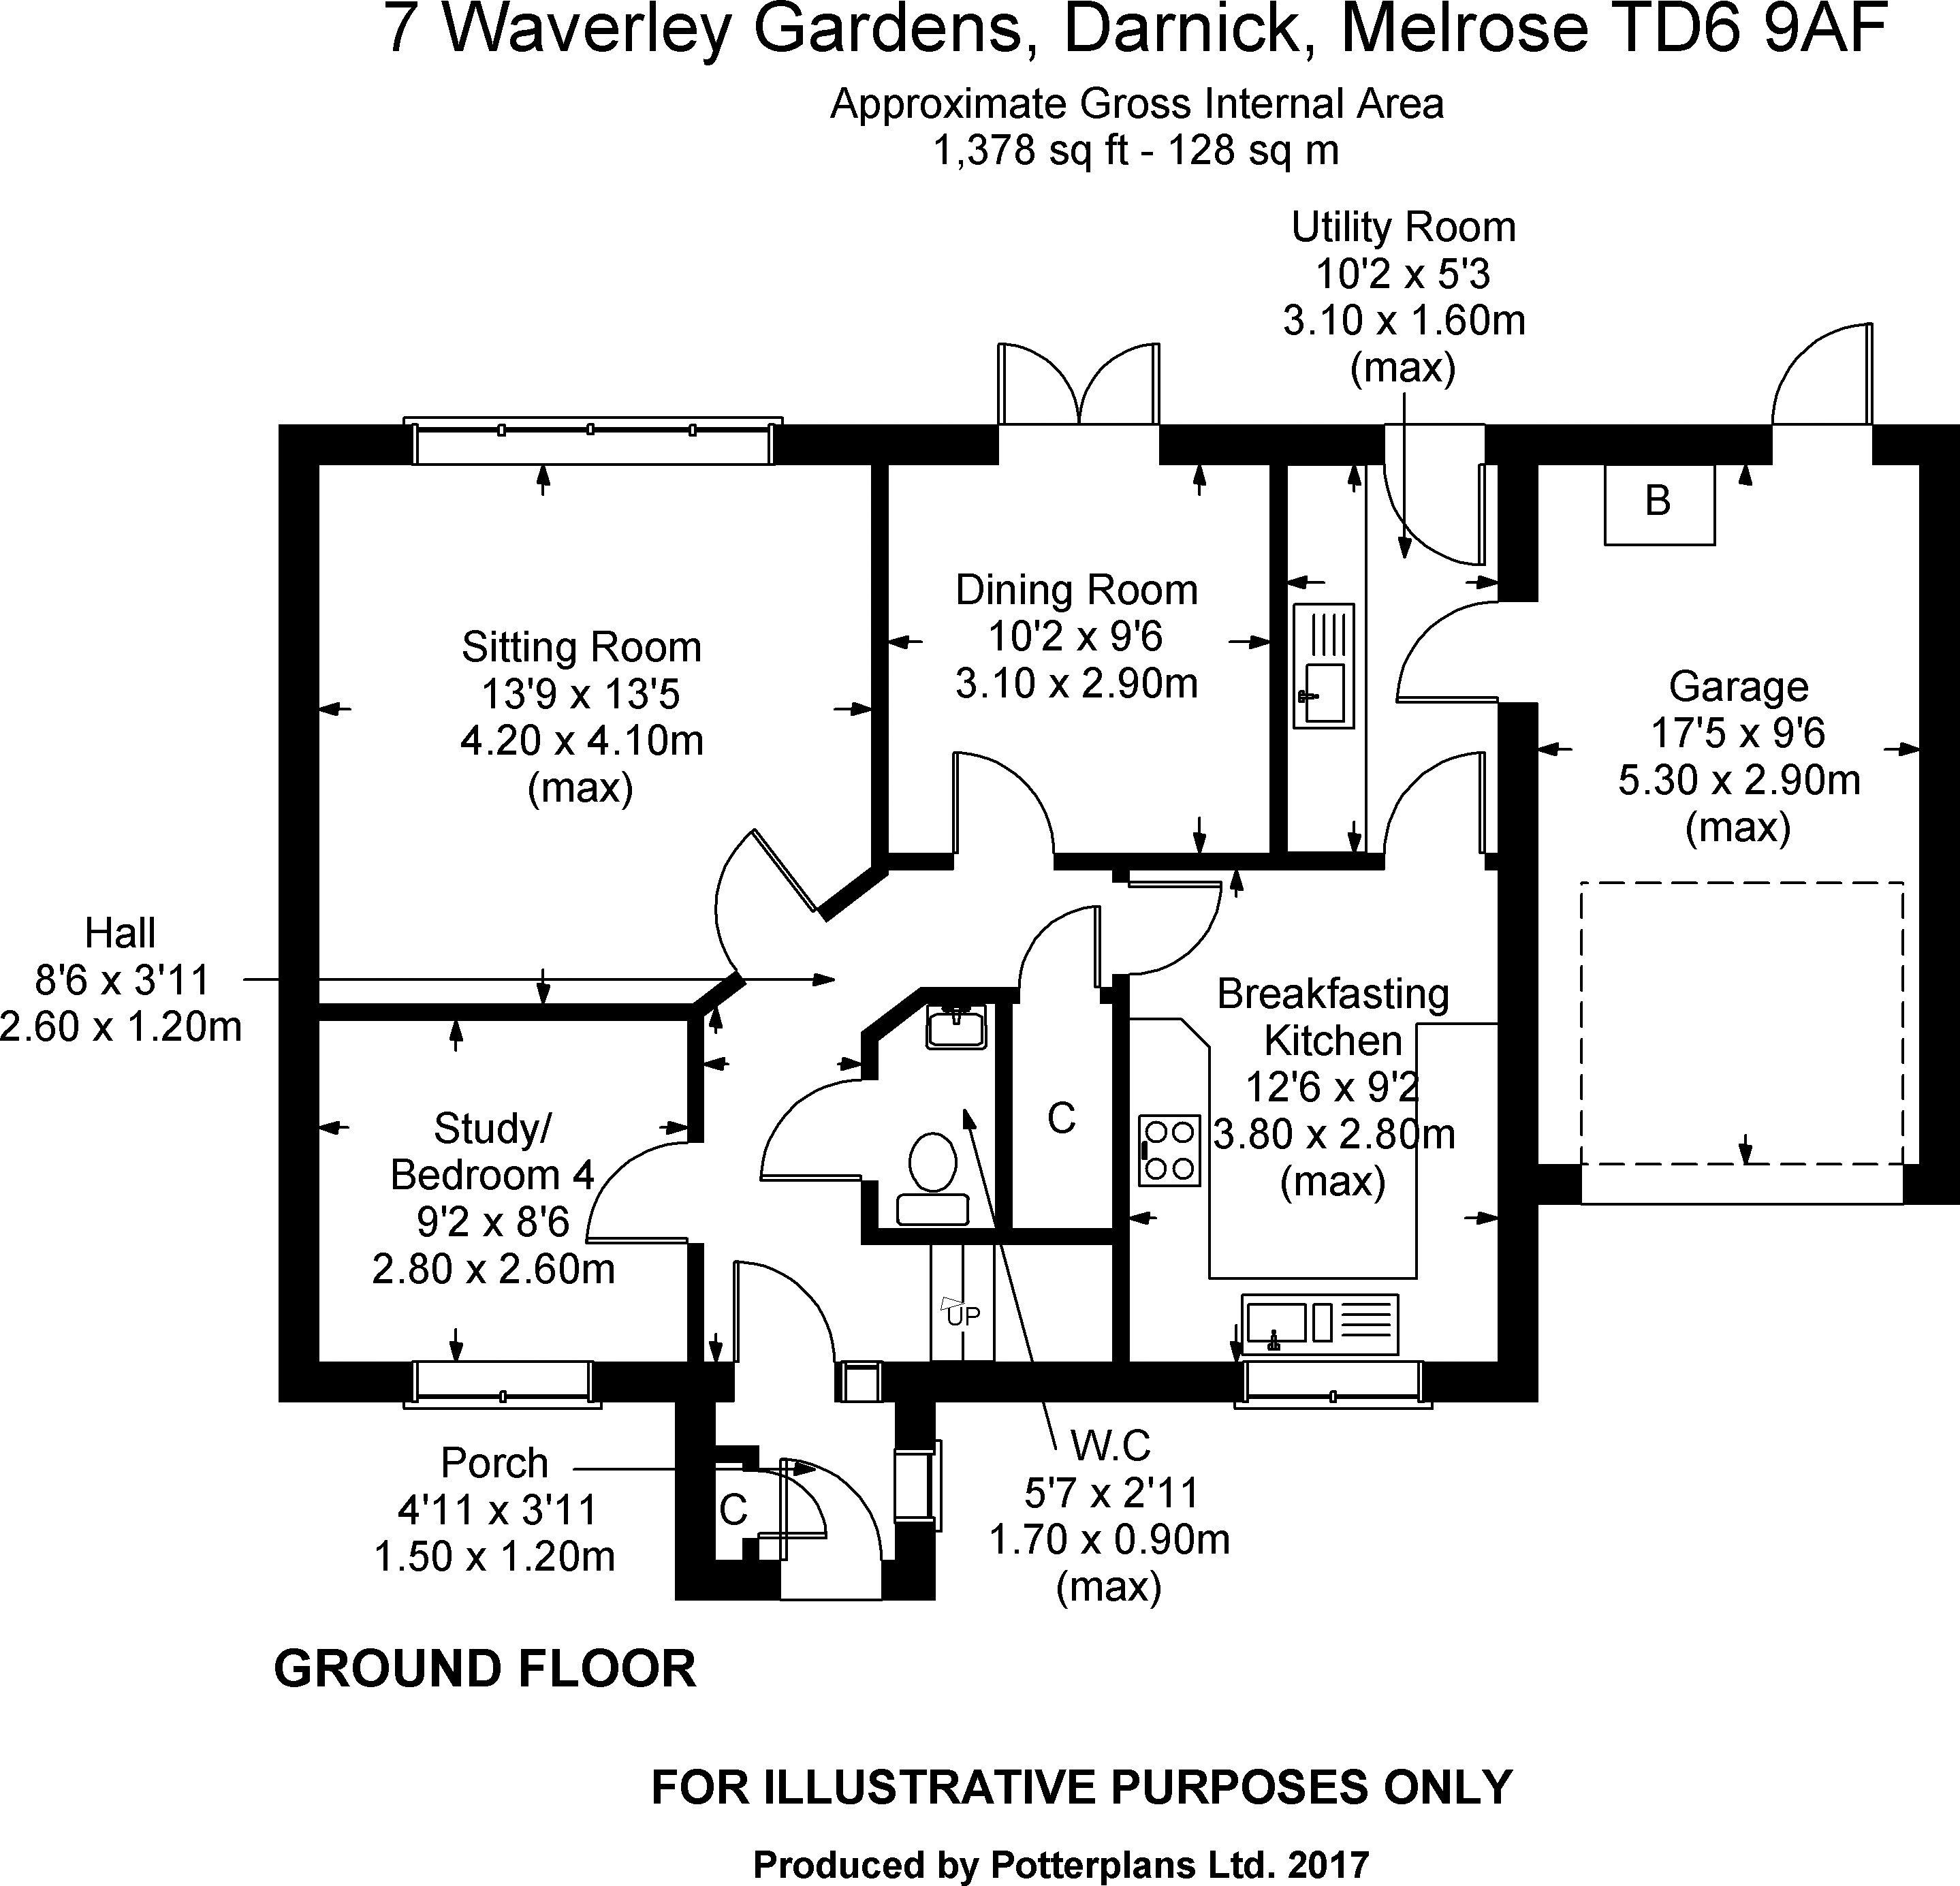 7 Waverley Gardens Ground Floor